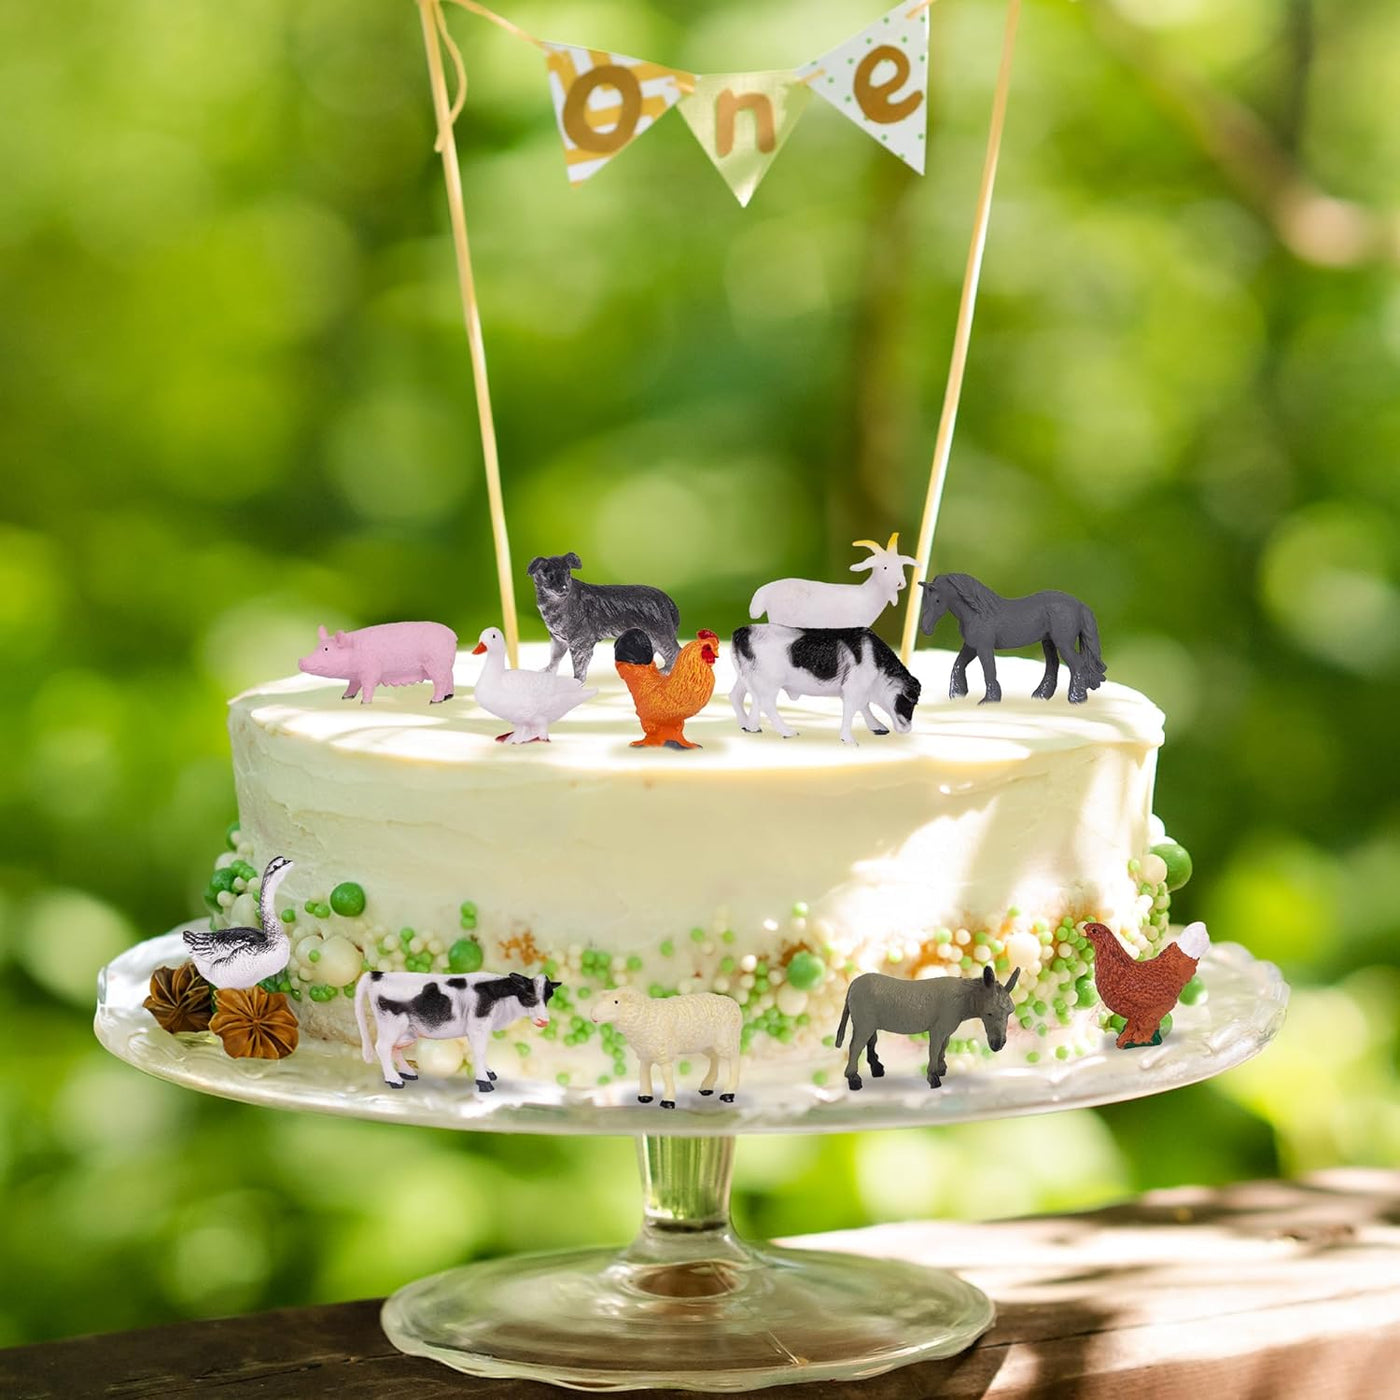 ArtCreativity Farm Animal Figurines - Farm Animal Figures Set Includes 12 Pieces - 2 inch Barnyard Farm Animal Cake Toppers with a Lifelike Design - Farm Party Favors for Kids Birthday Decorations